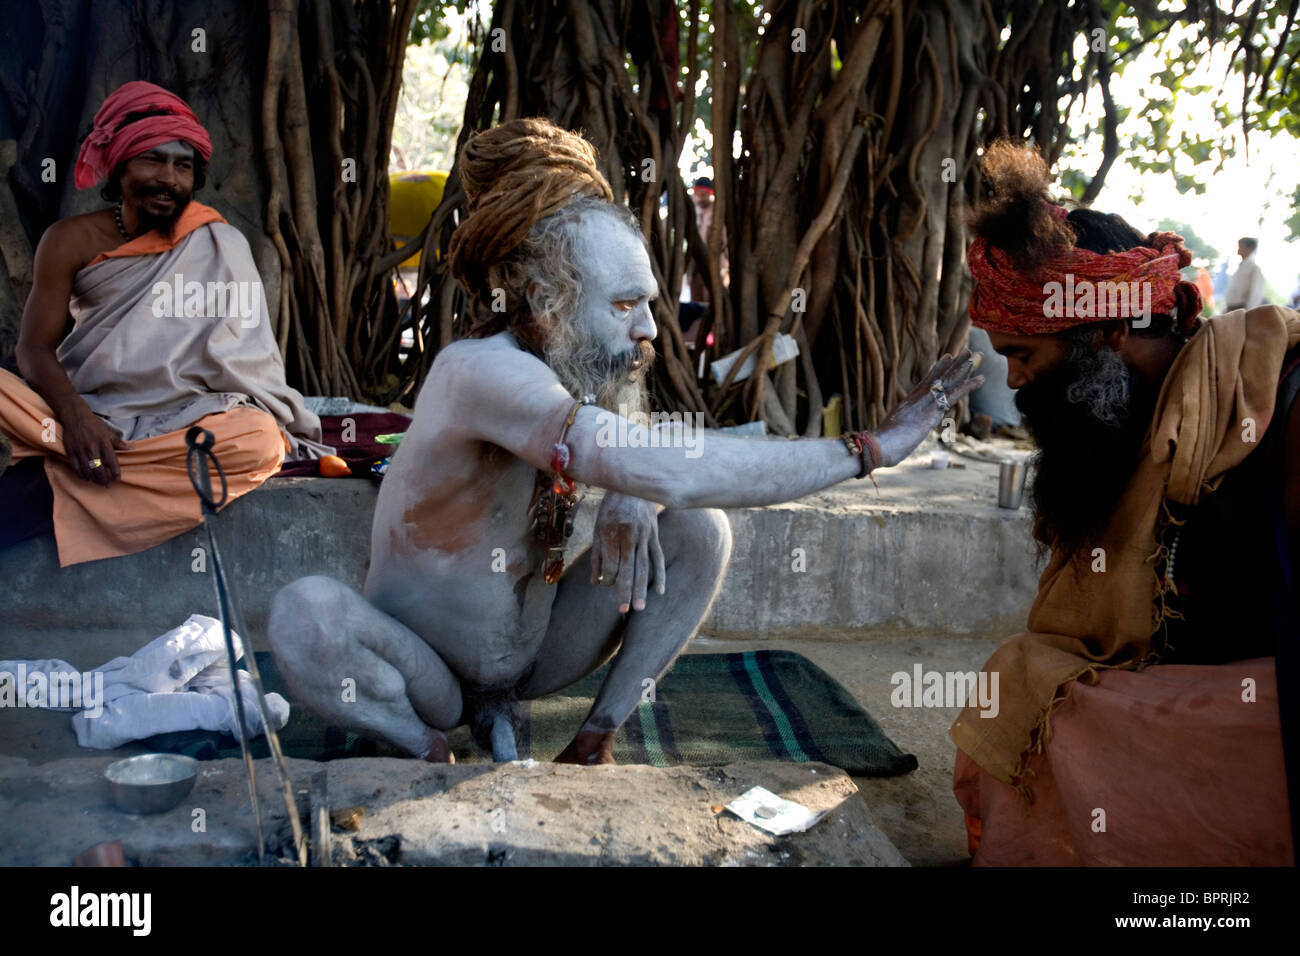 A Sadhu Holy Man Is Blessing A Follower At The Kumbh Mela